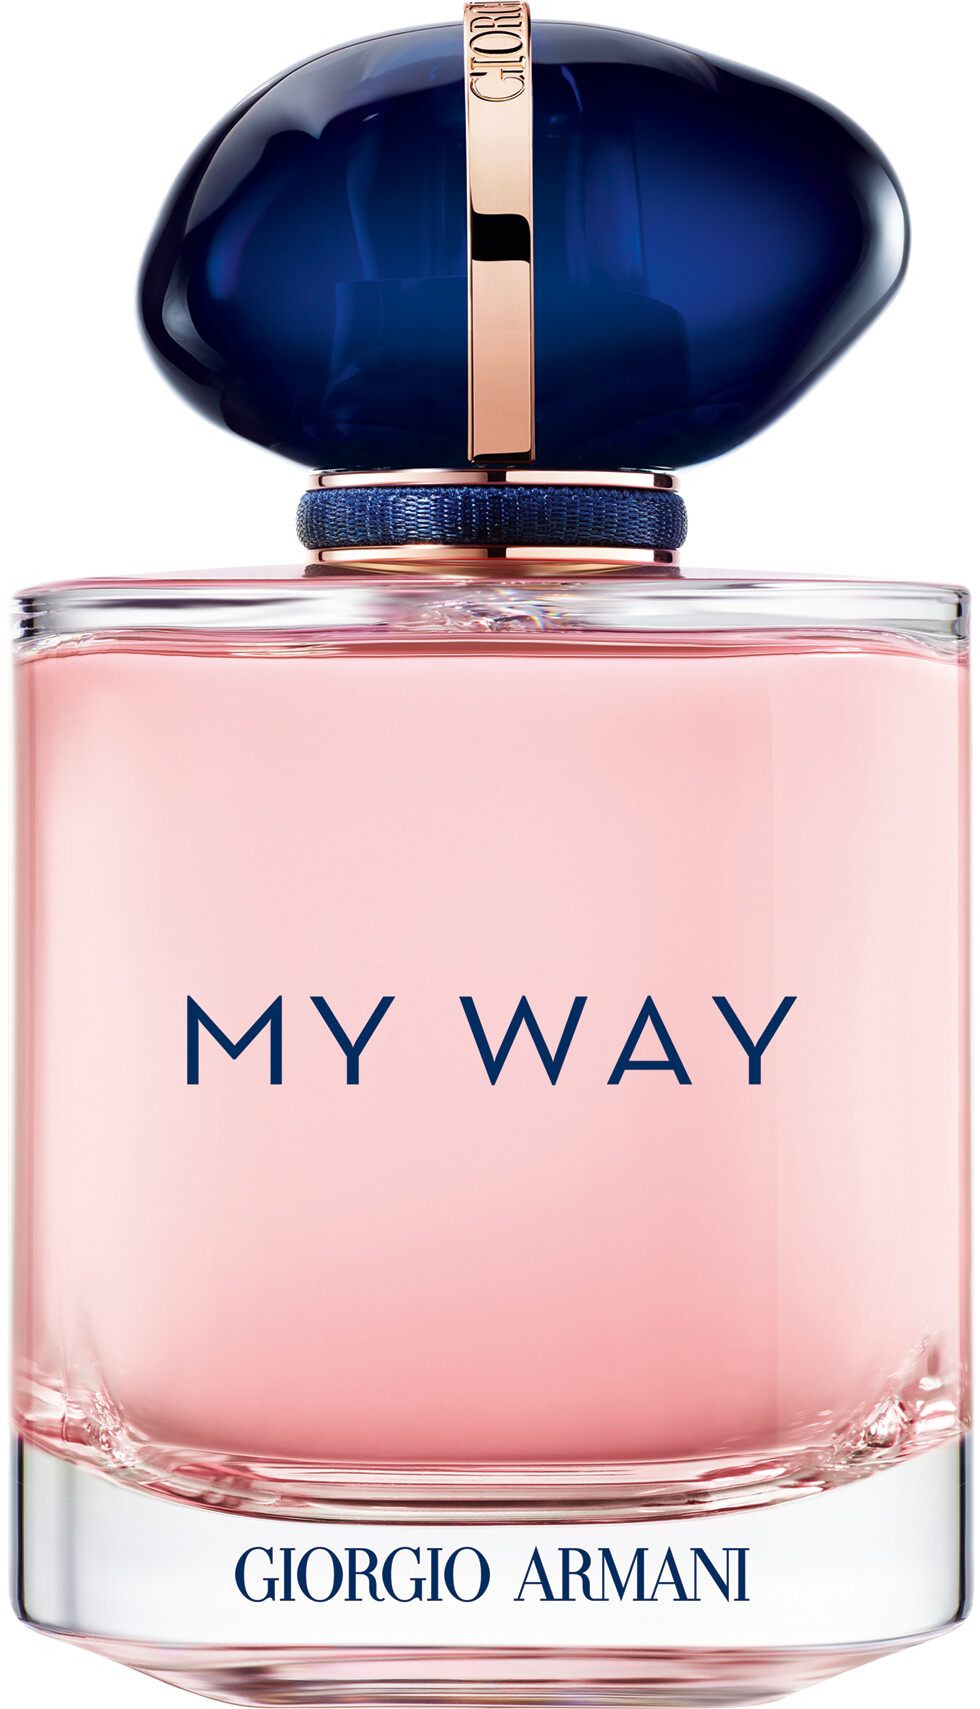 Giorgio Armani My Way Eau de Parfum Spray 90ml